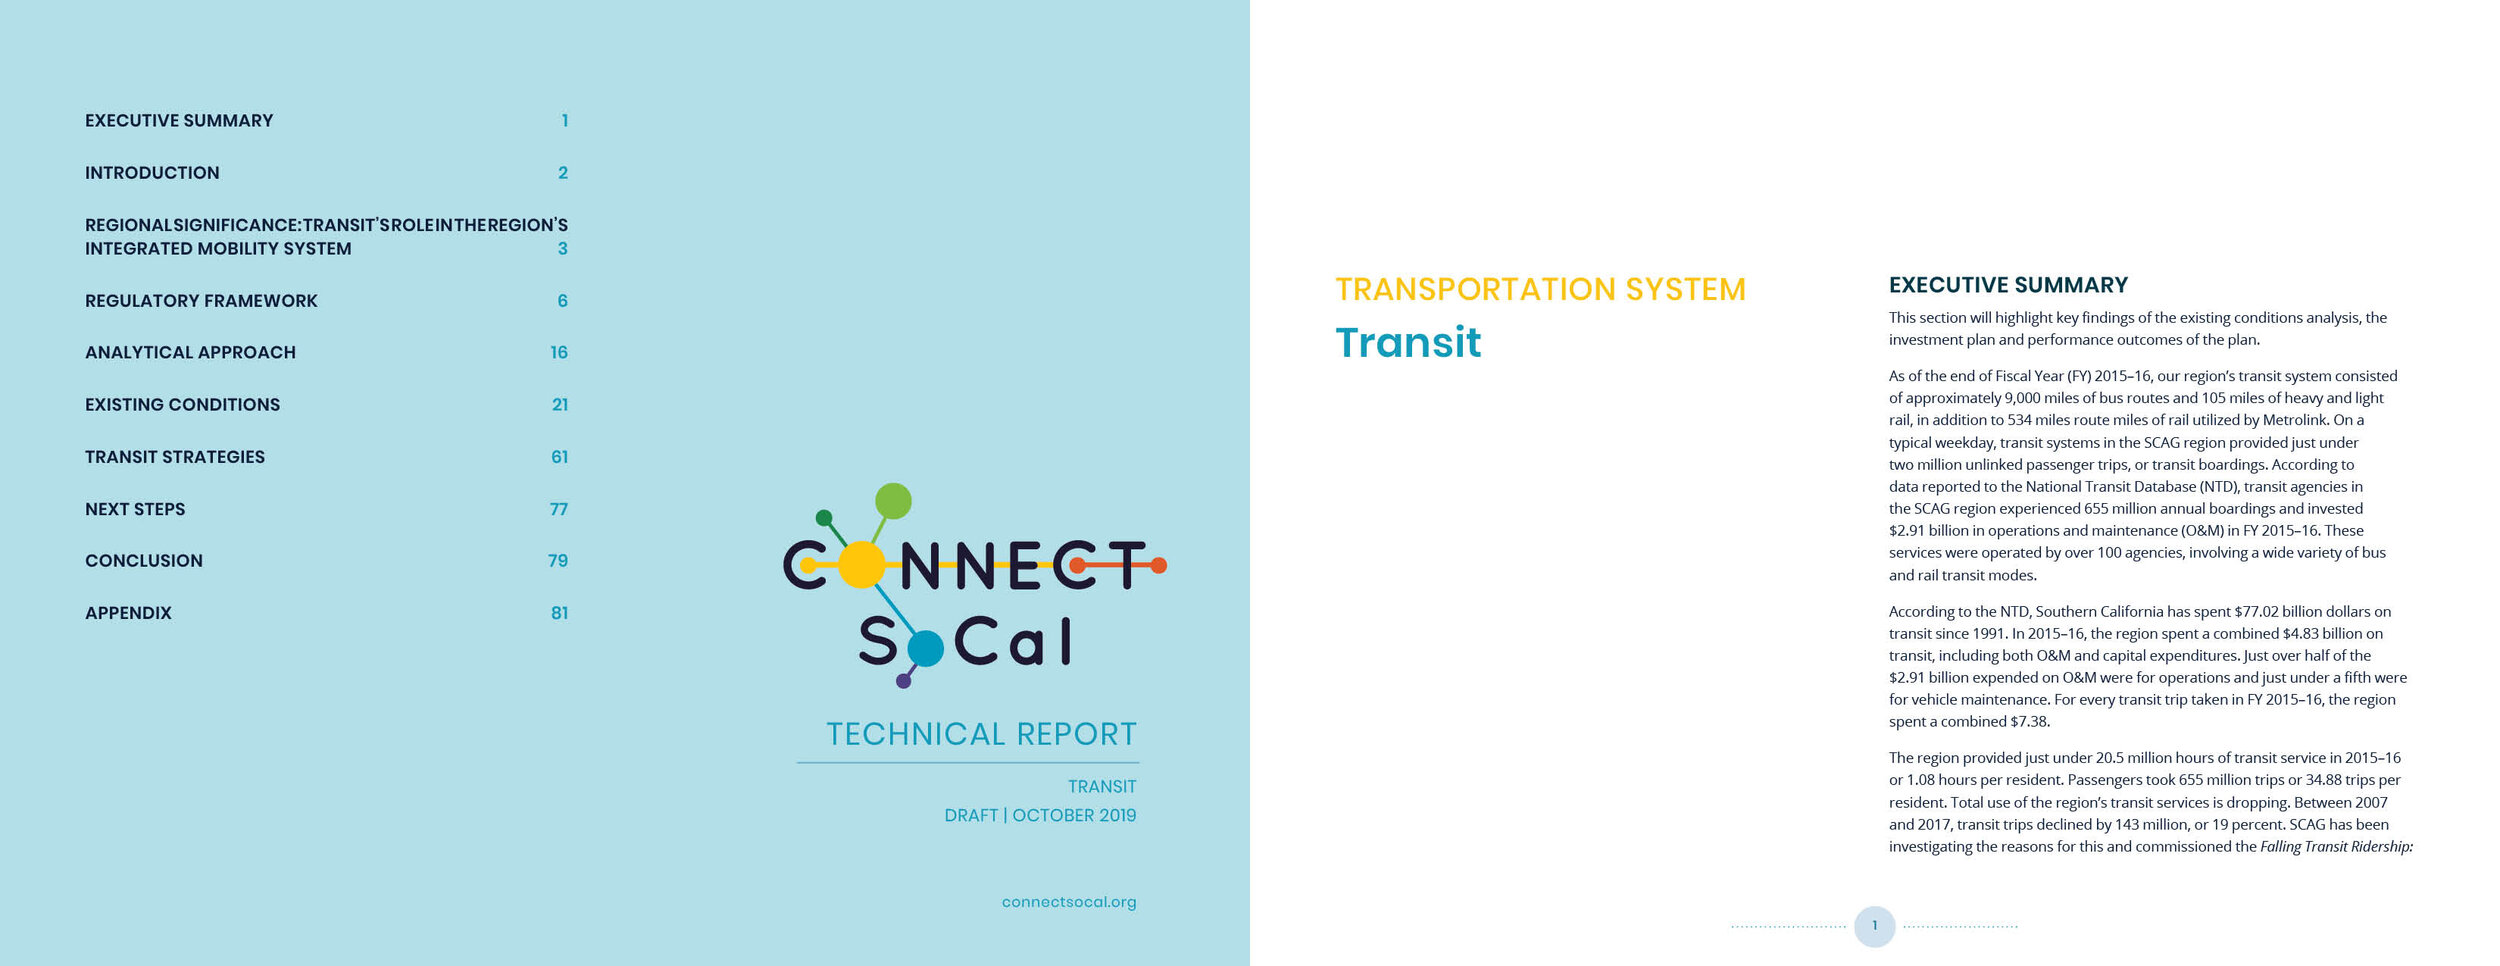 Draft_ConnectSoCal_Transit2.jpg